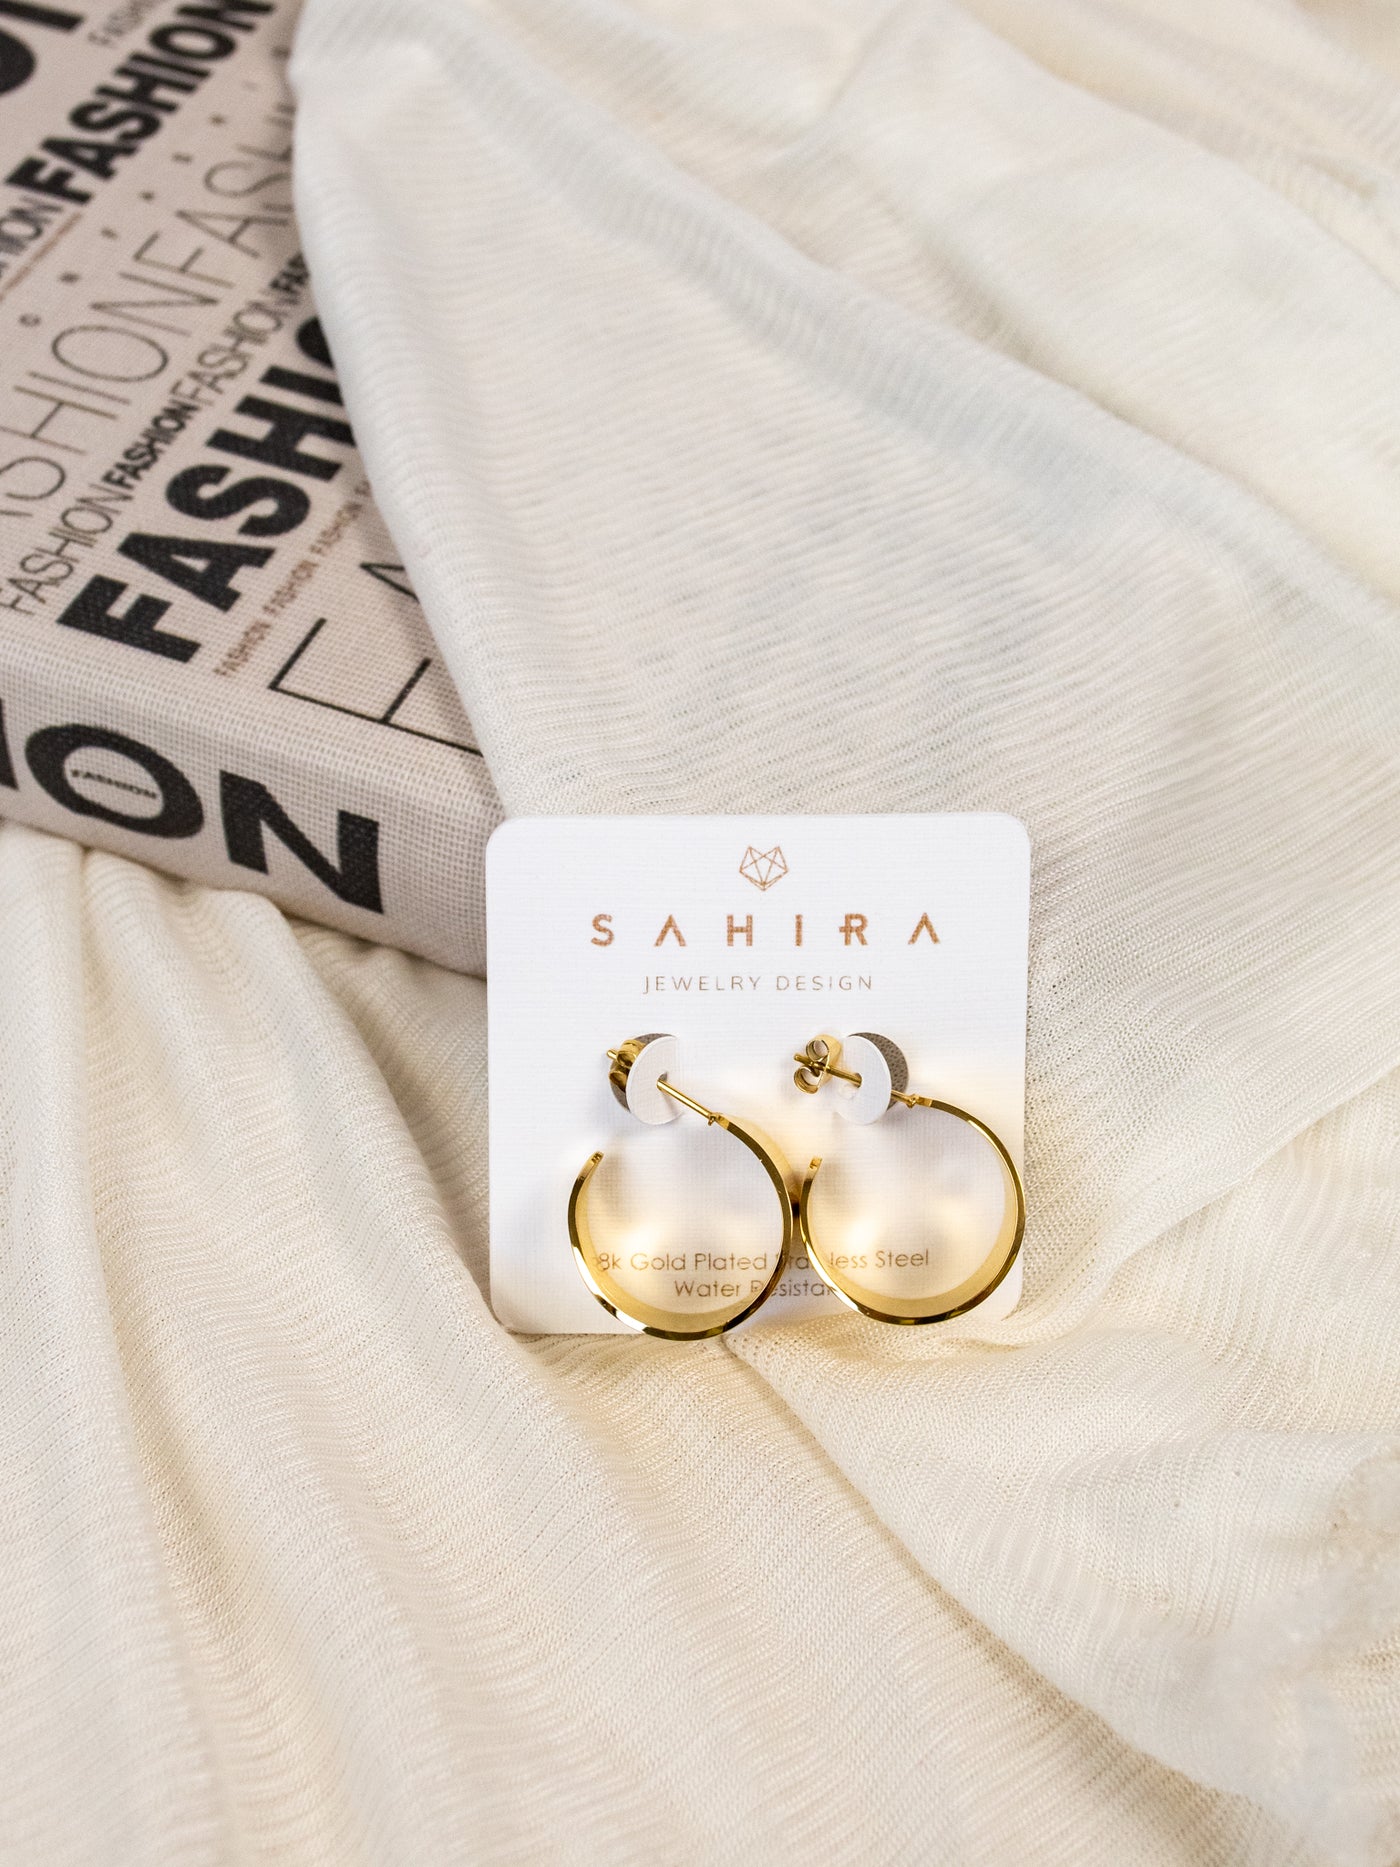 A pair of mini gold tapered hoop earrings.